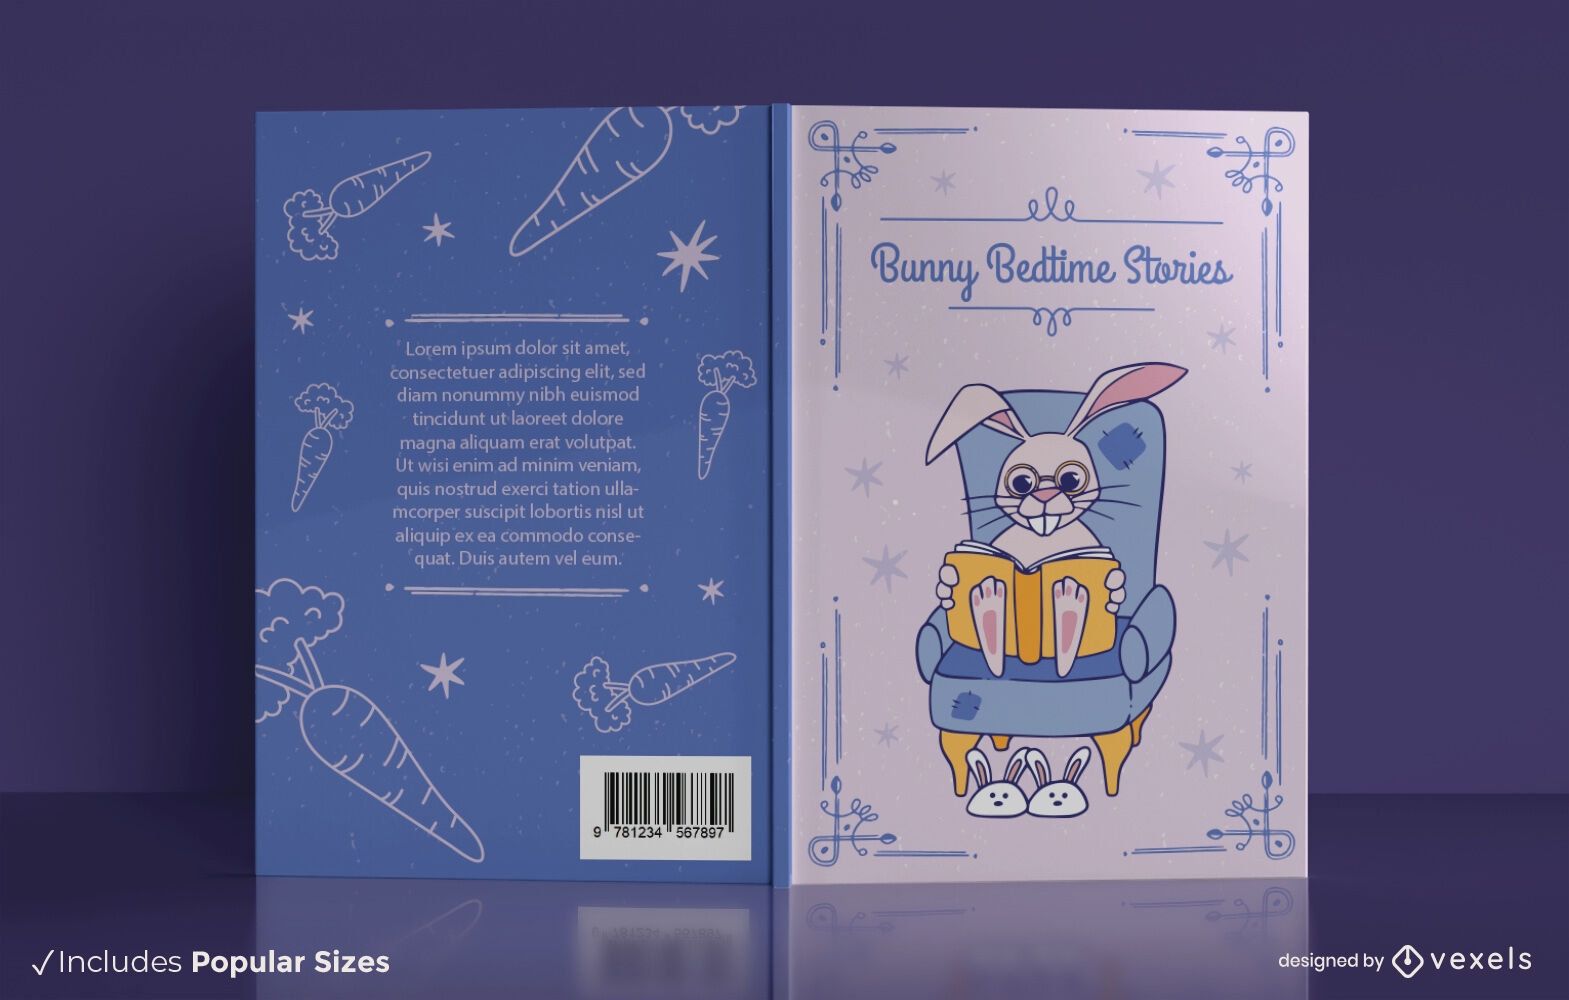 Bunny bedtime stories book cover design